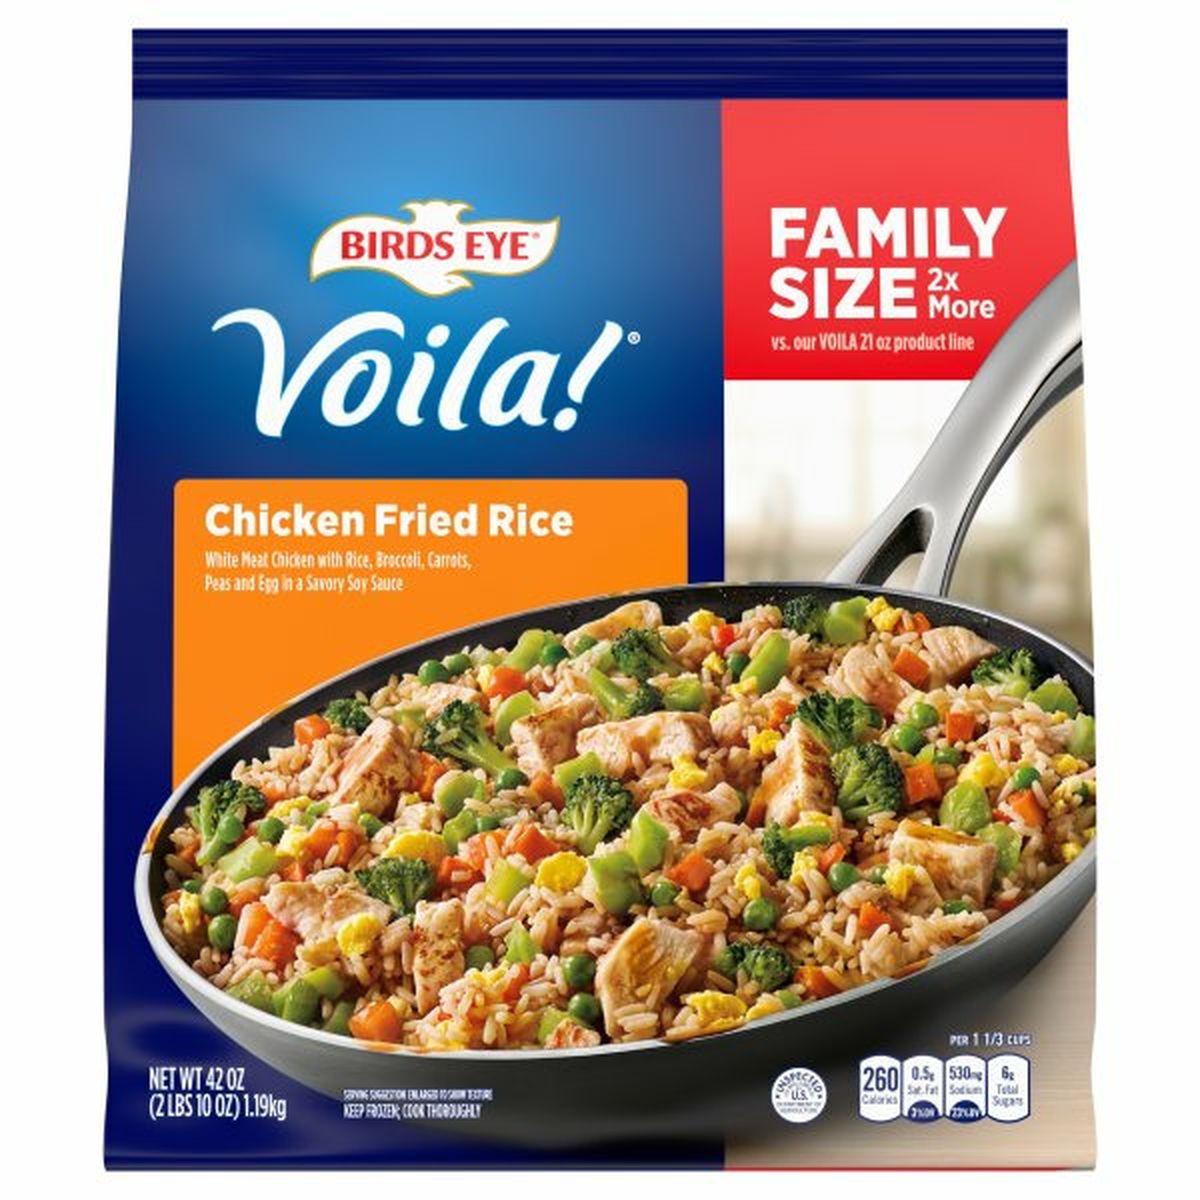 Calories in Birds EyeÂ Voila! Voila Chicken Fried Rice, Family Size